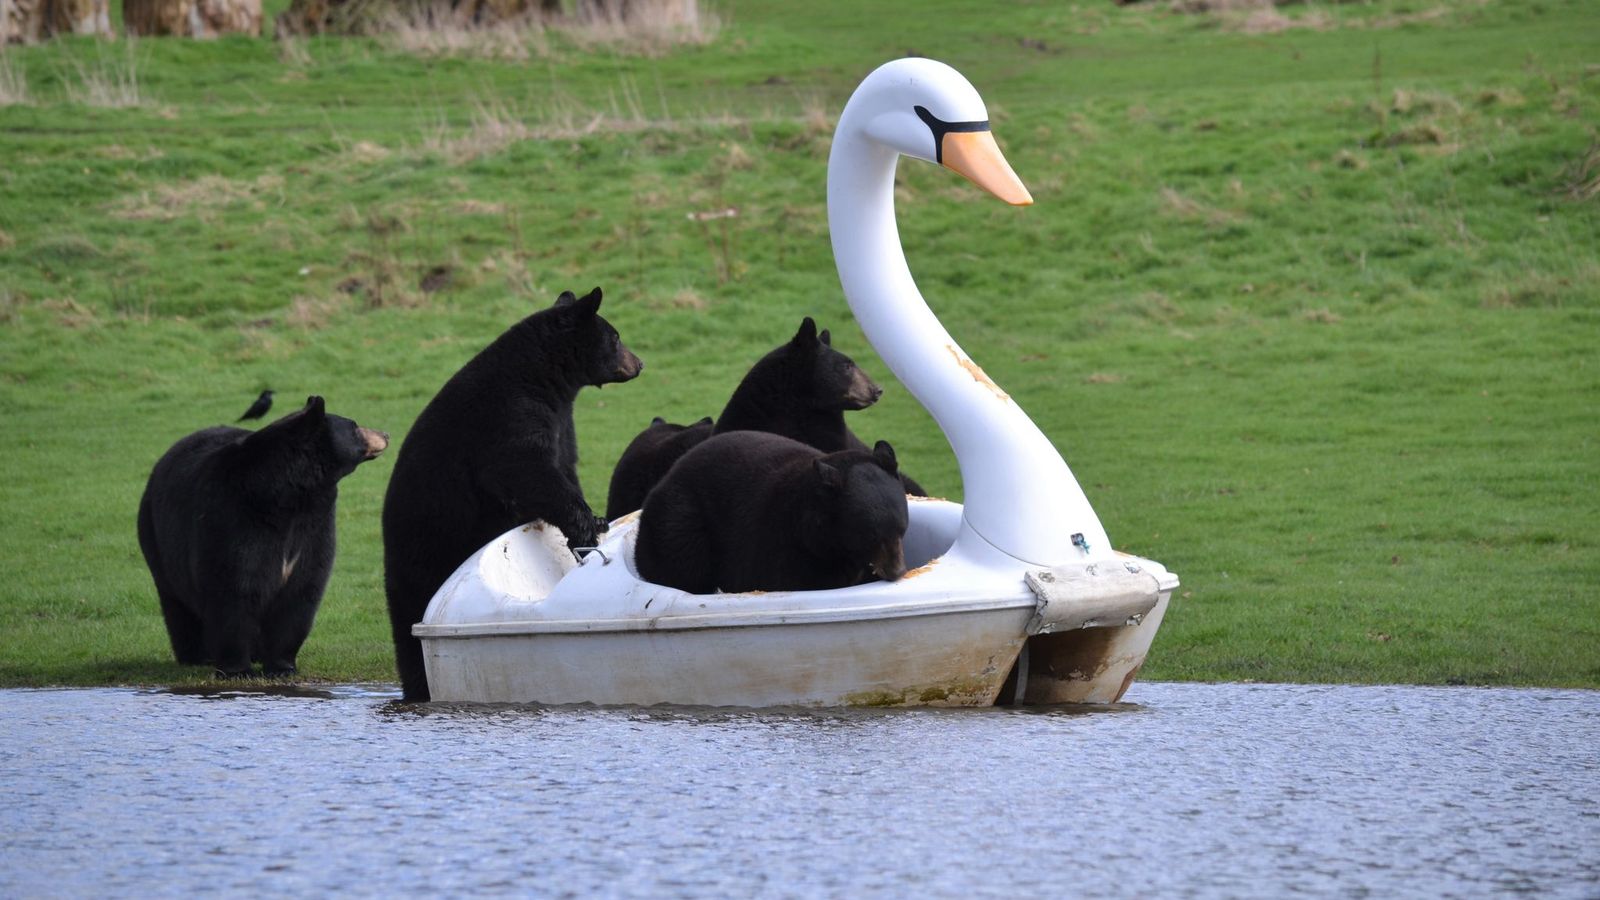 Bedfordshire: Black bears at Woburn Safari Park ride on swan pedalos